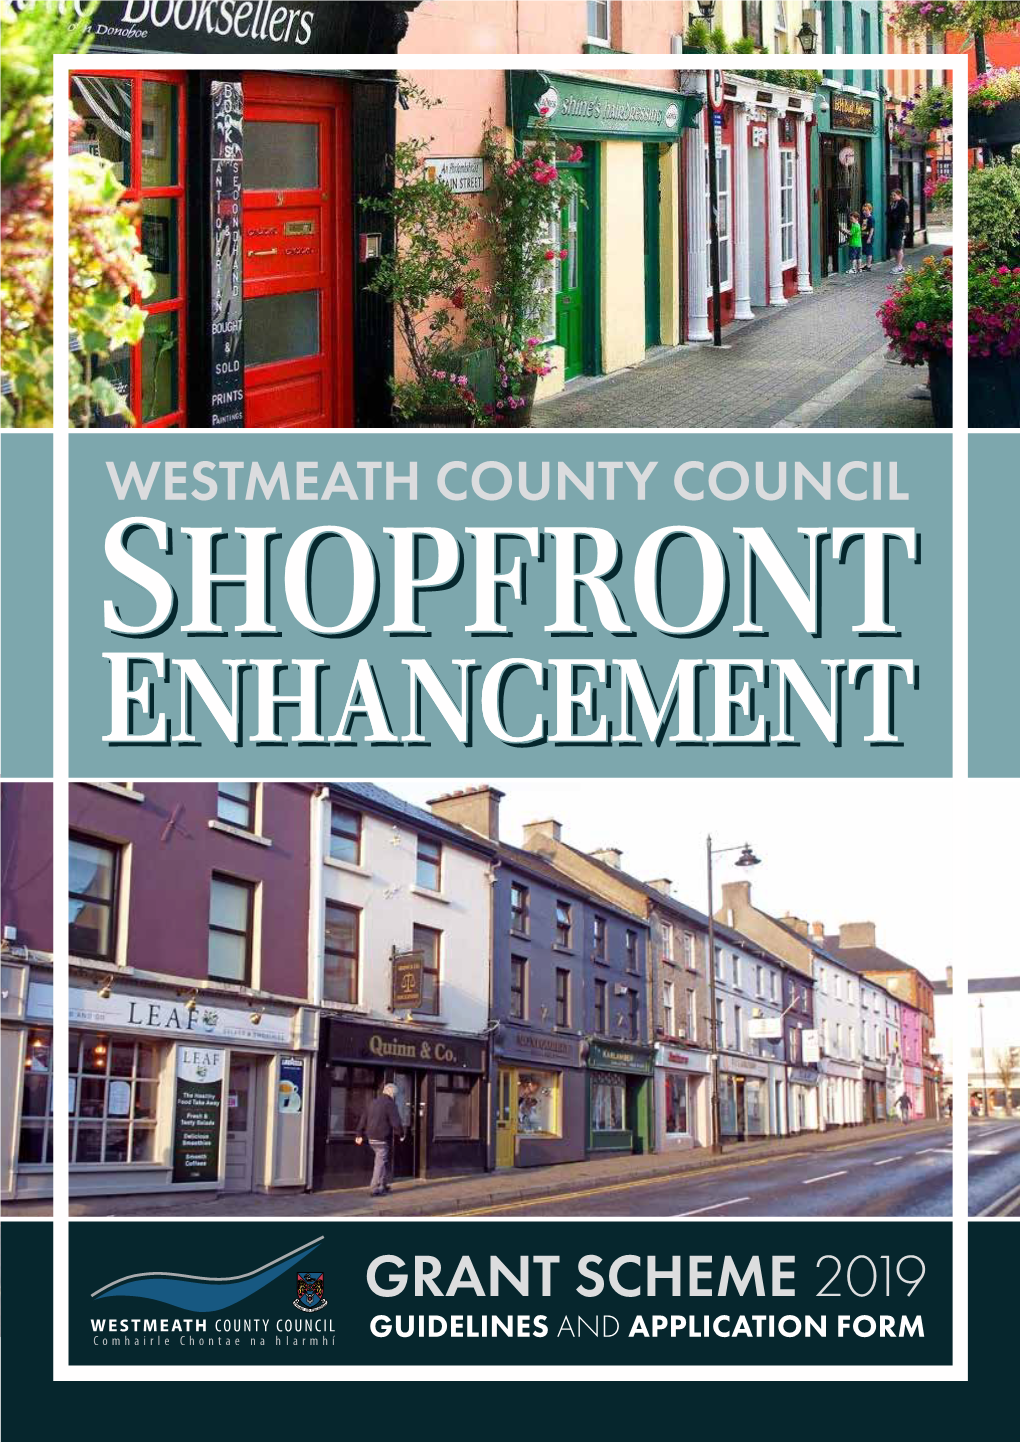 Westmeath County Council Shopfront Enhancement Grant Scheme Is Still Open for Applications 357.88 KB